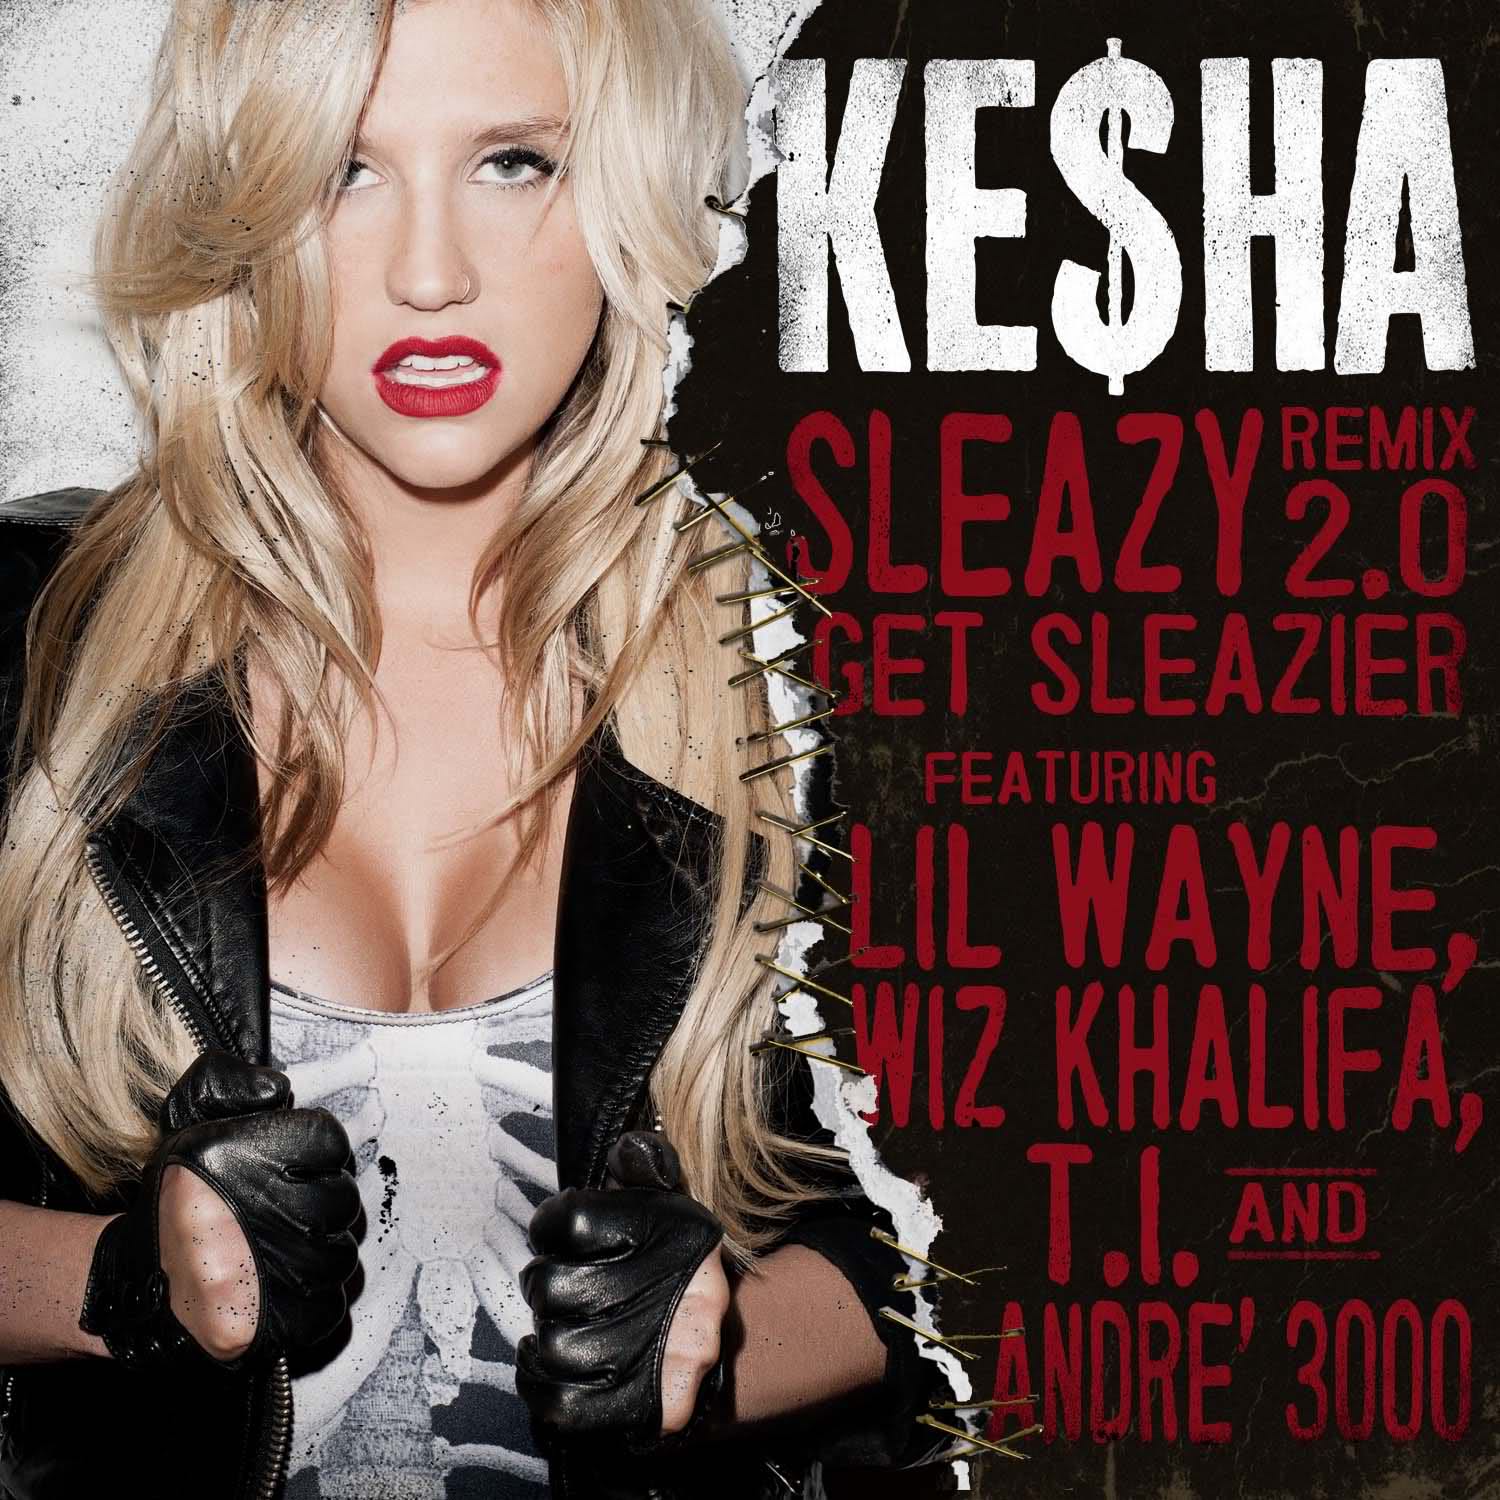 Kesha ft. featuring Lil Wayne, Wiz Khalifa, T.I., & André 3000 Sleazy Remix 2.0: Get Sleazier cover artwork